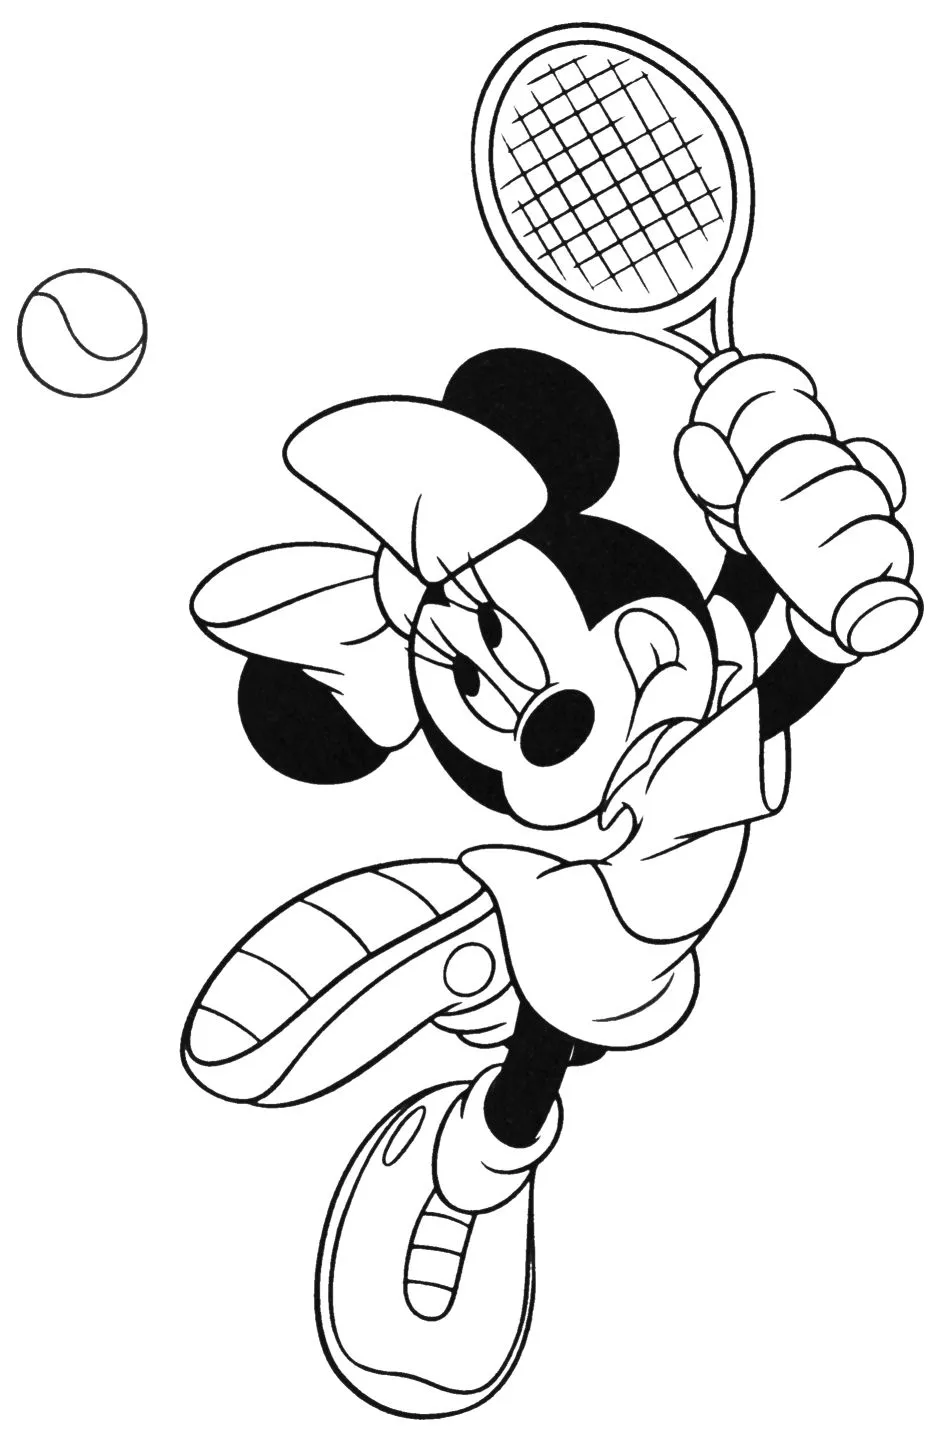 Dibujos para colorear de Disney: Minnie Mouse